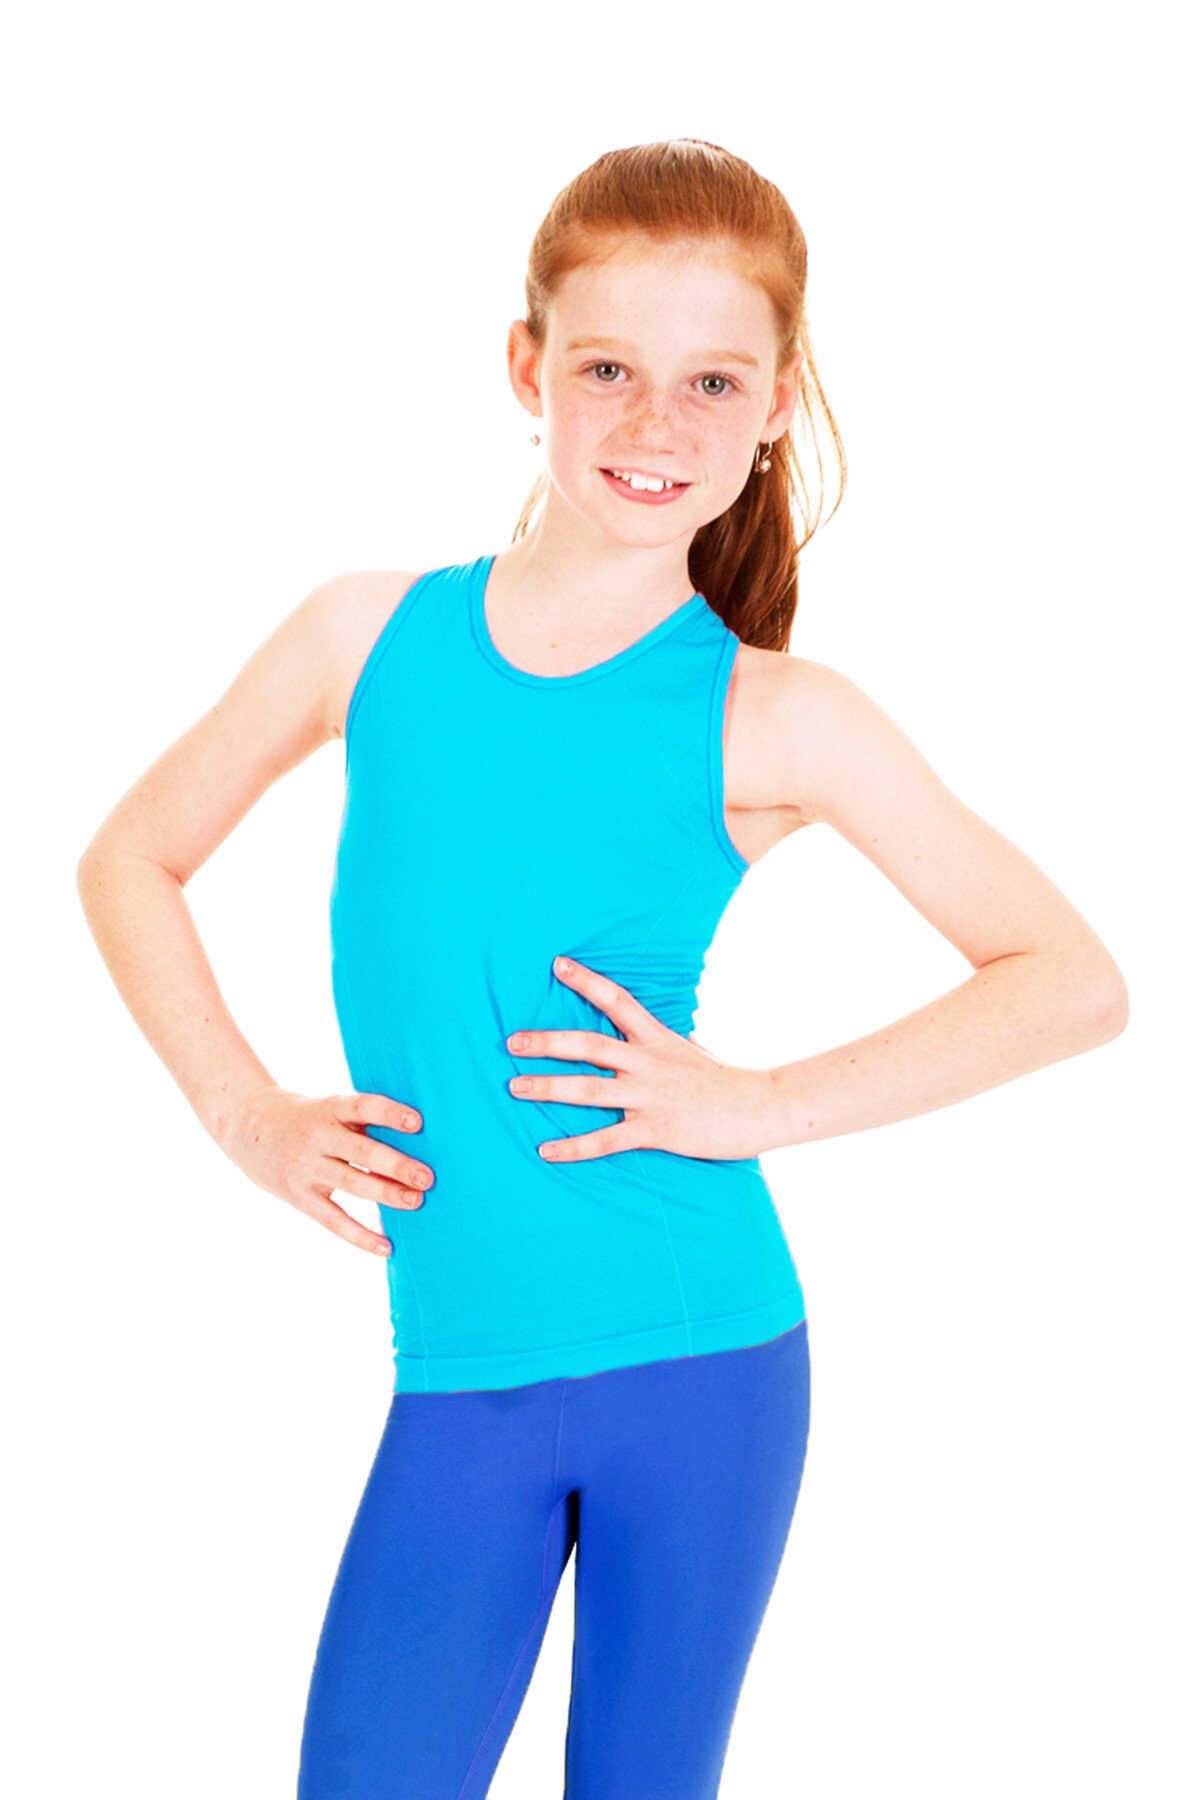 Limeapple Stylish Performance Activewear For Tween Girls